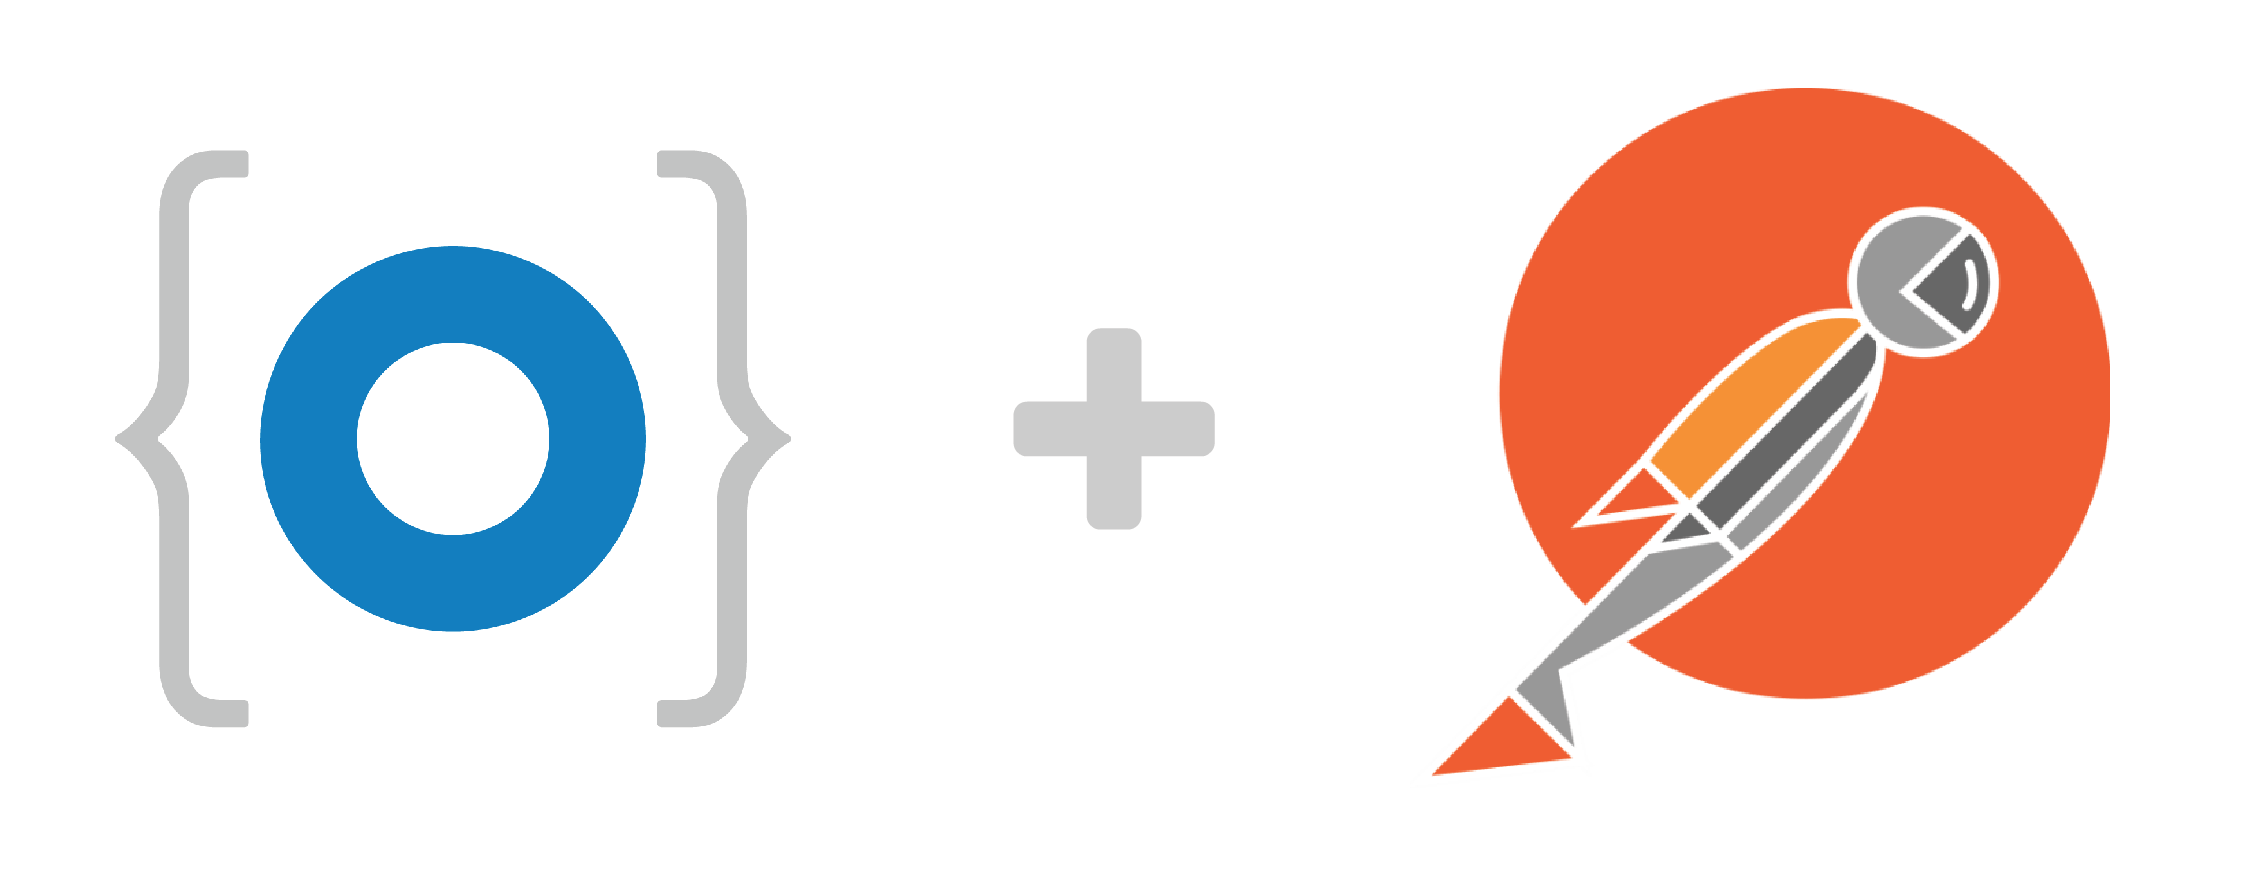 Postman Logo - Get Started with the Okta REST APIs